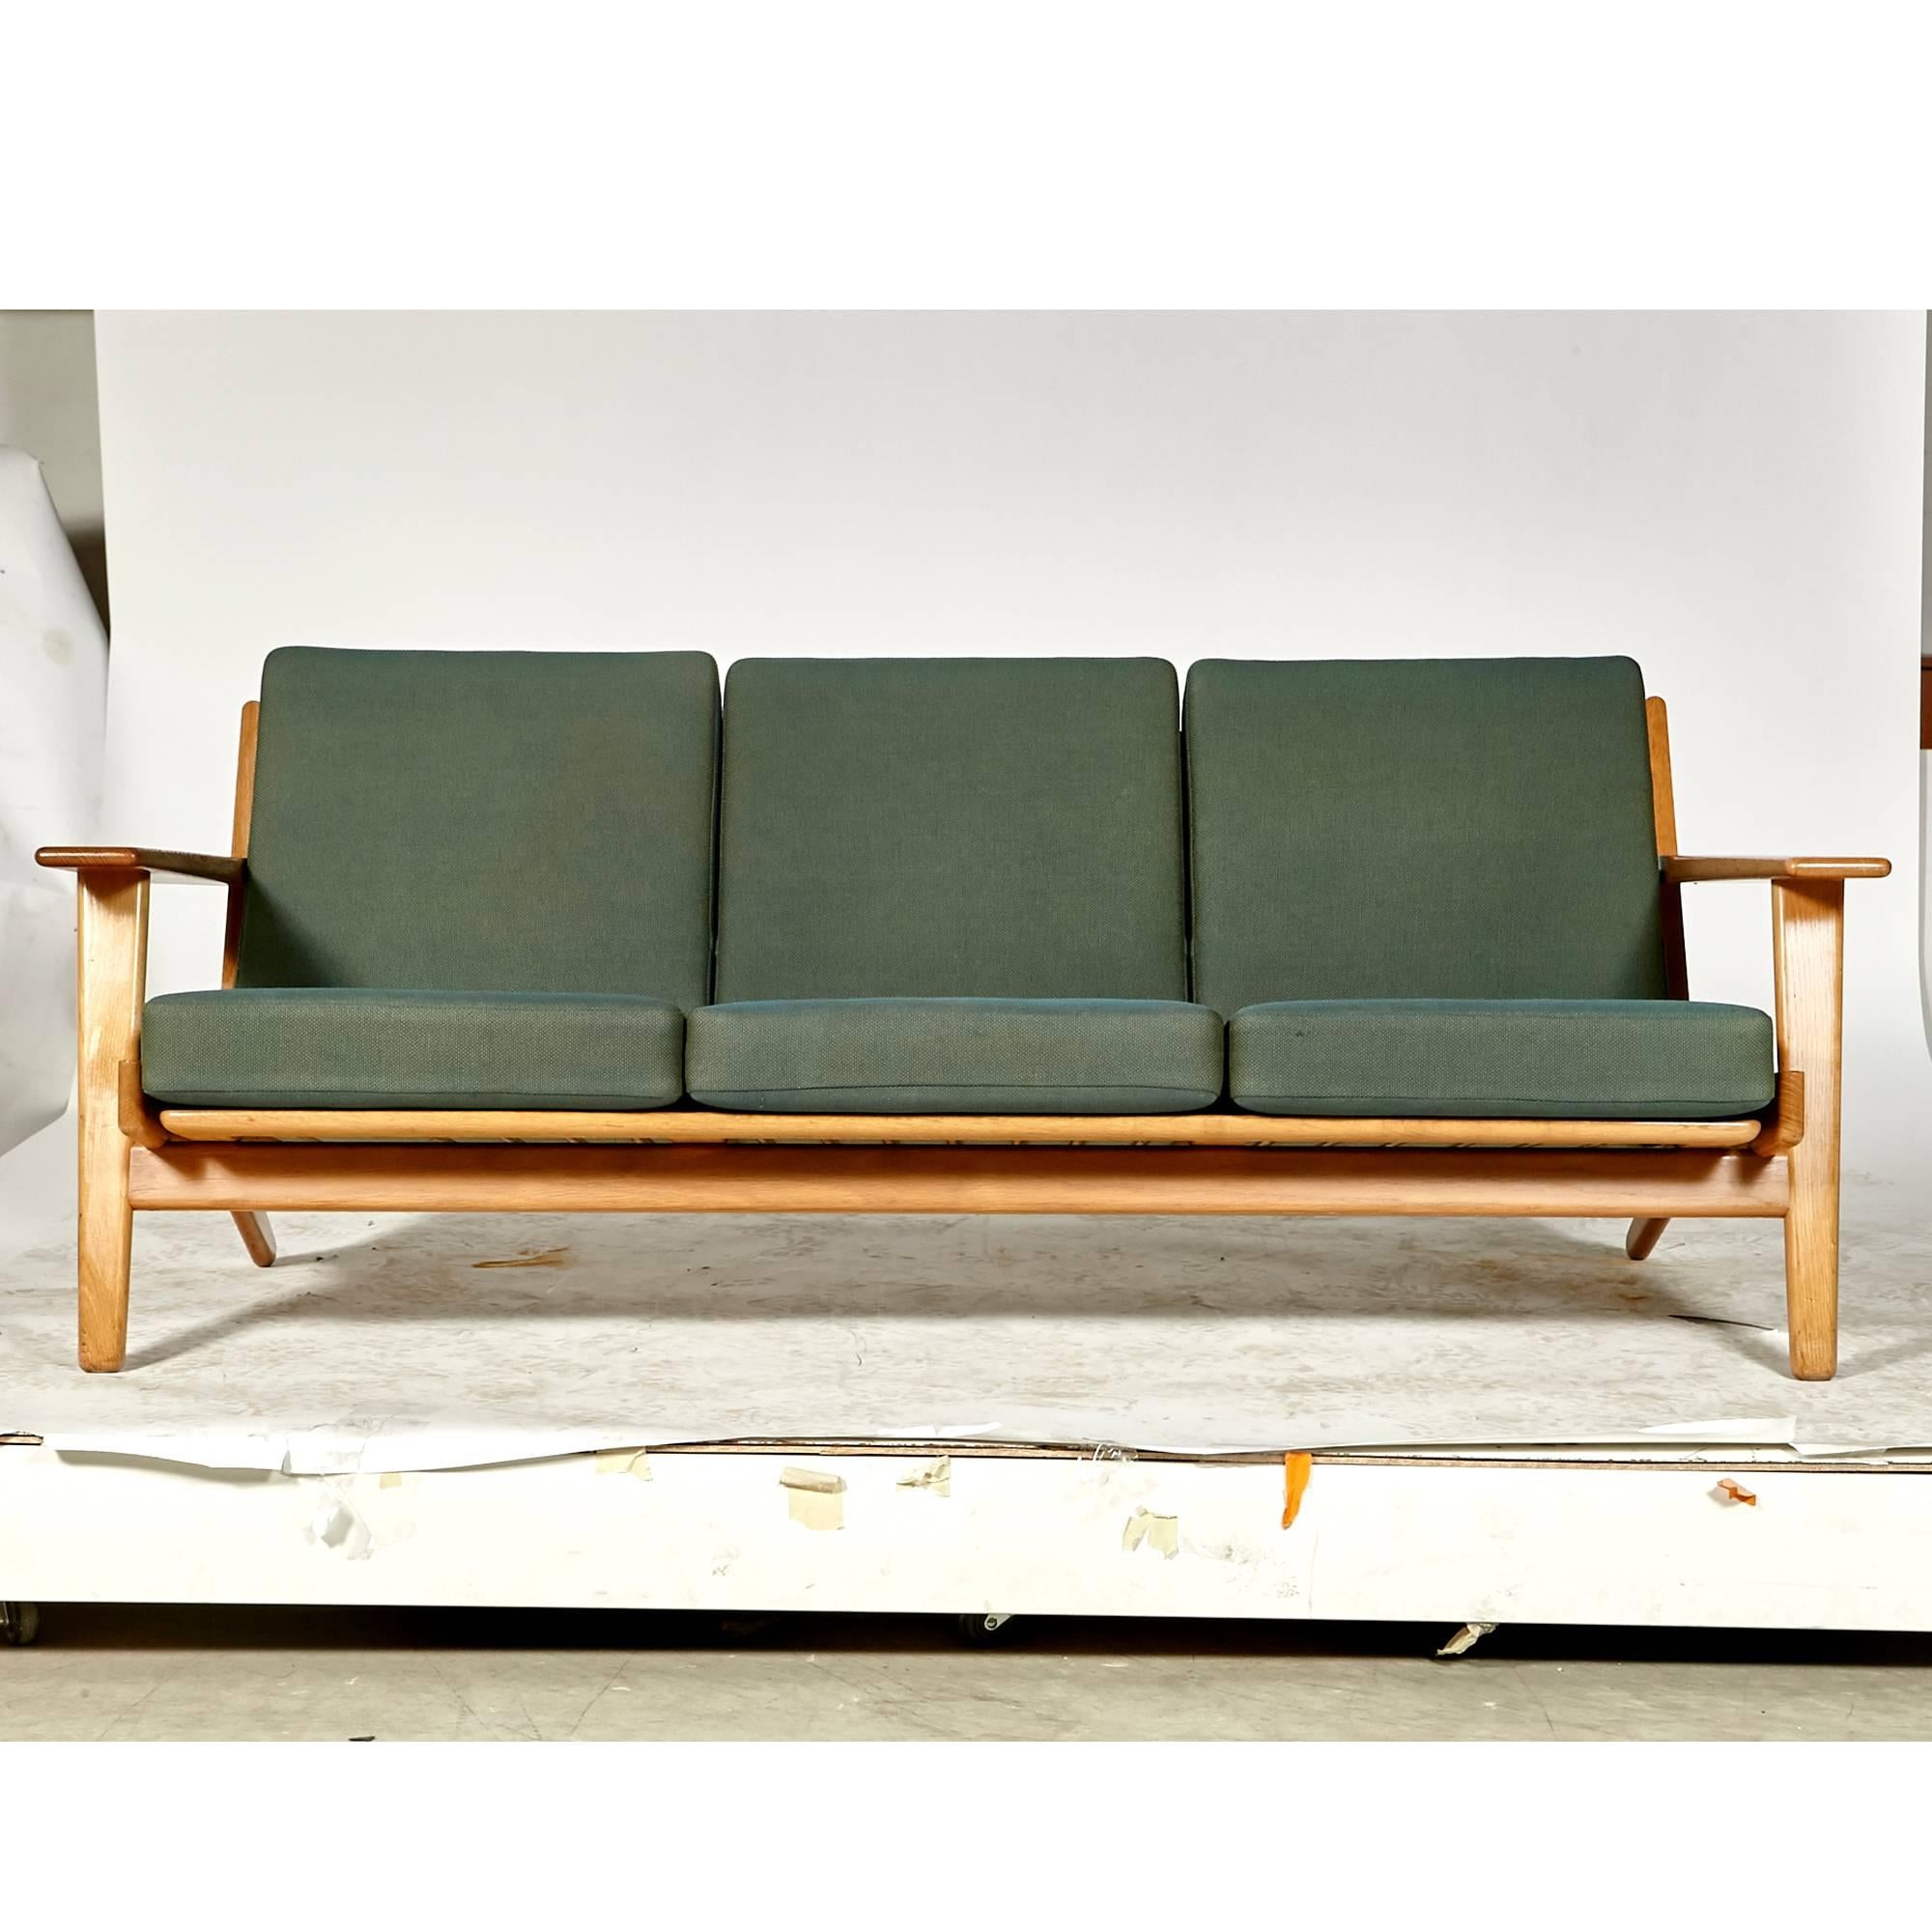 Vintage 1960s Hans J. Wegner three seat sofa designed for GETAMA of Denmark in oak Model GE-290. Sofa has paddle arms and original green fabric. Measures: Arm height 20.5